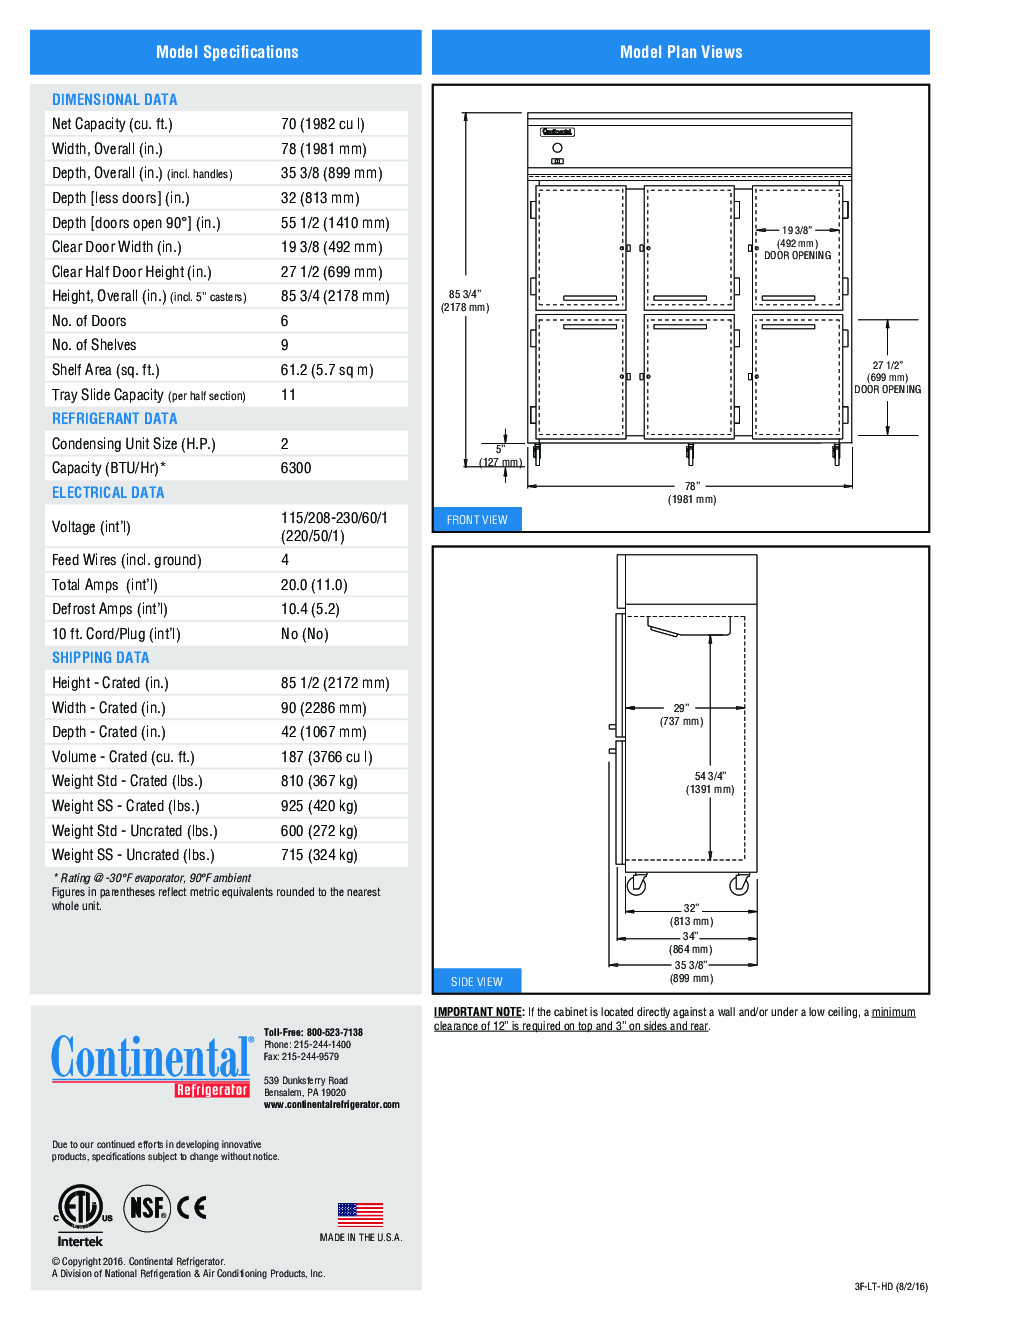 Continental Refrigerator 3F-LT-SA-HD Reach-In Low Temperature Freezer